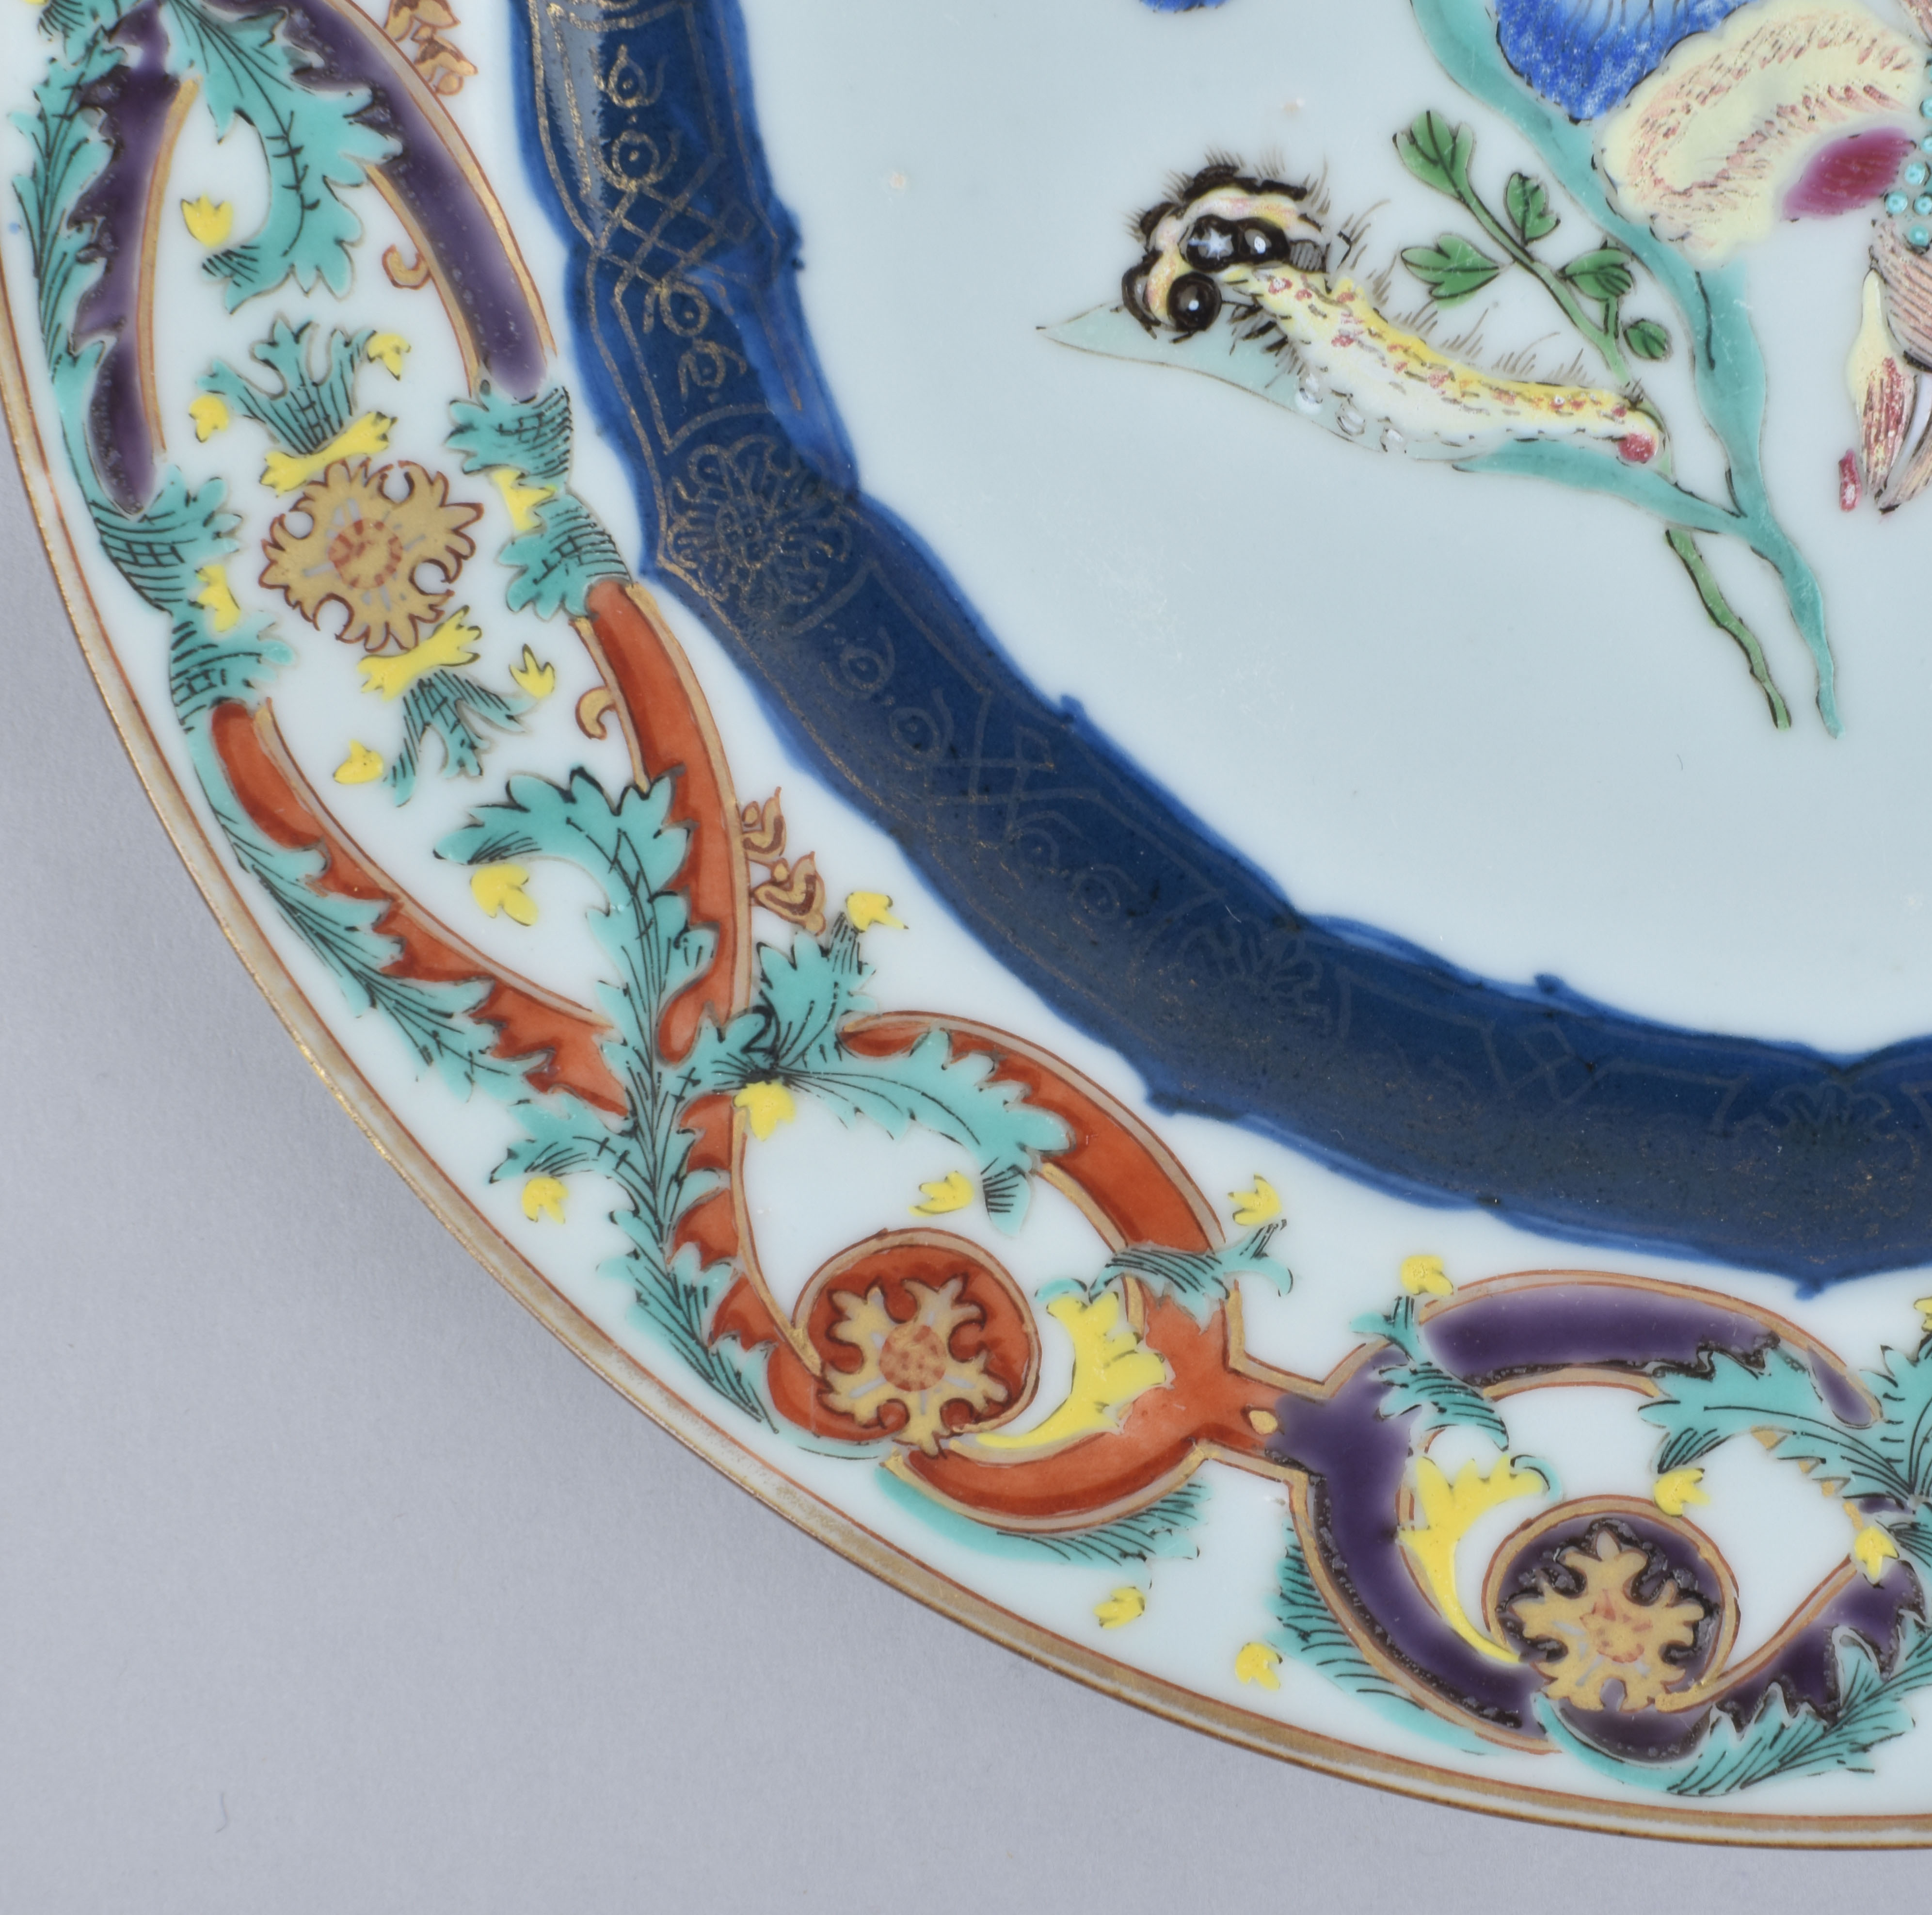 Porcelaine Qianlong (1735-1795), ca. 1738, Chine